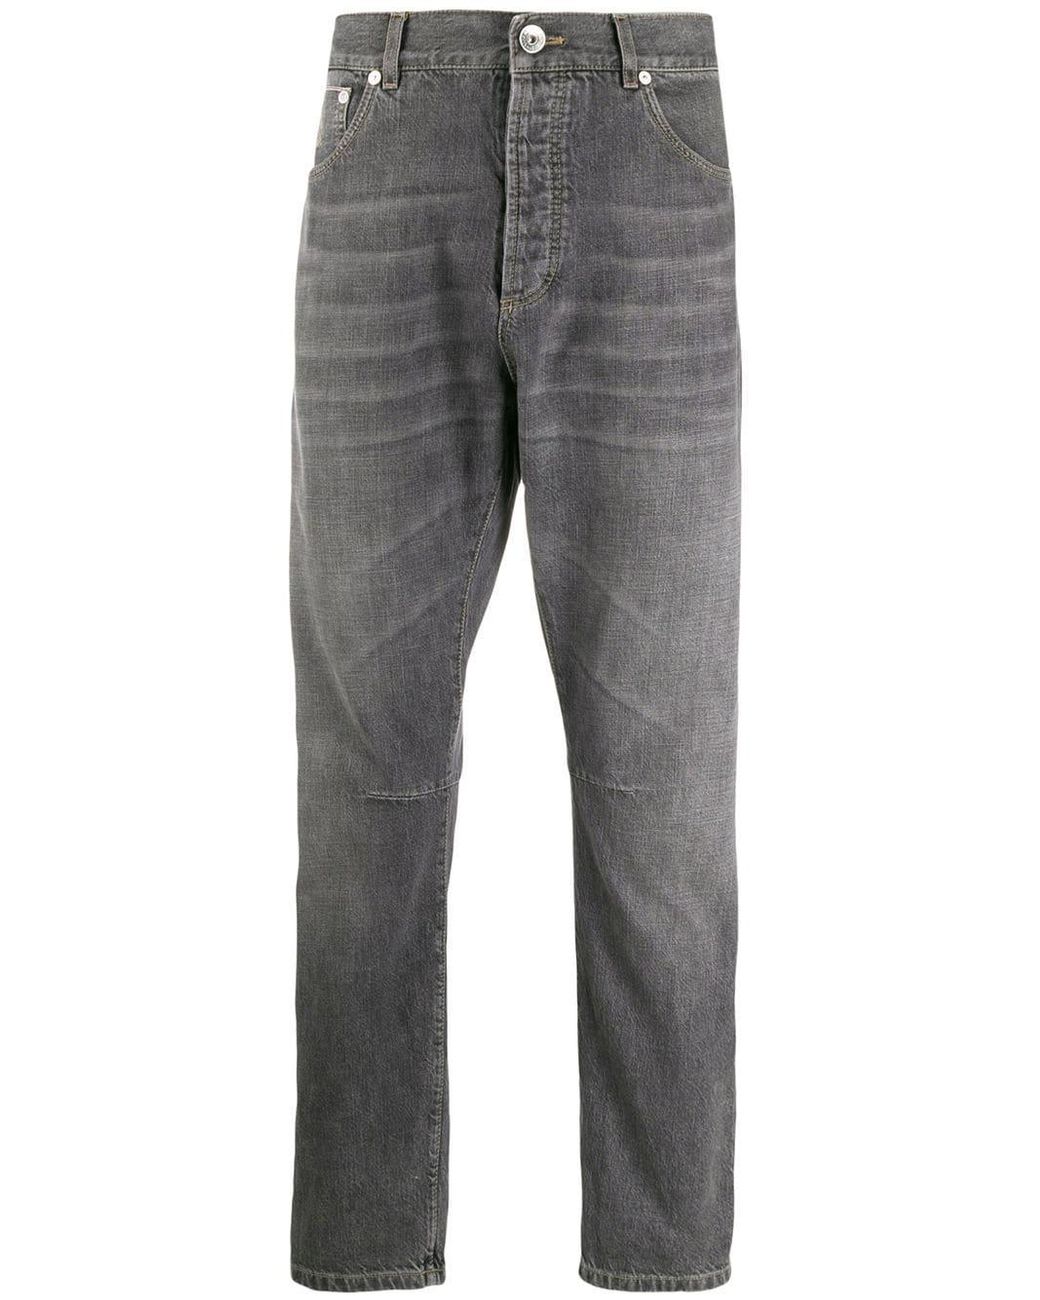 Brunello Cucinelli Denim Tapered Jeans in Grey (Gray) for Men - Lyst